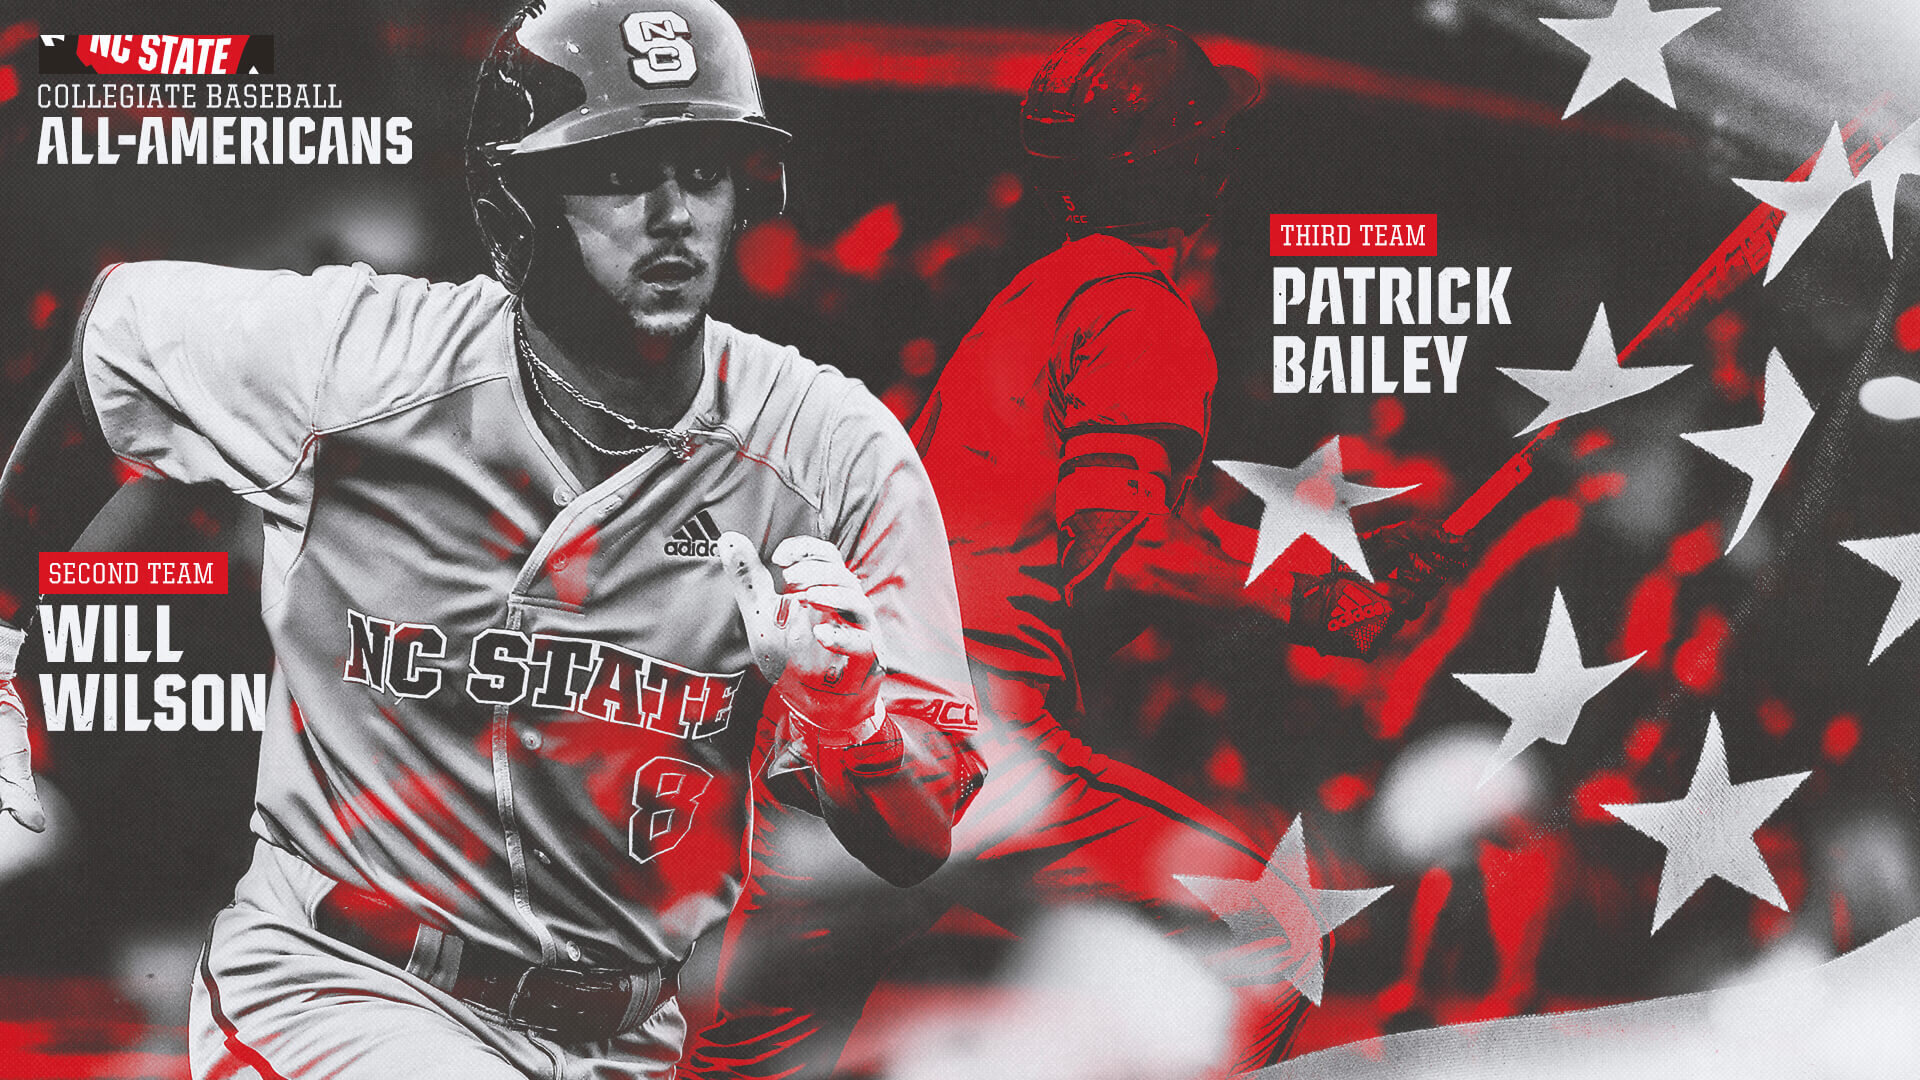 2019-nc-state-baseball-postseason-miscellaneous-all-america-will-wilson-patrick-bailey.jpg